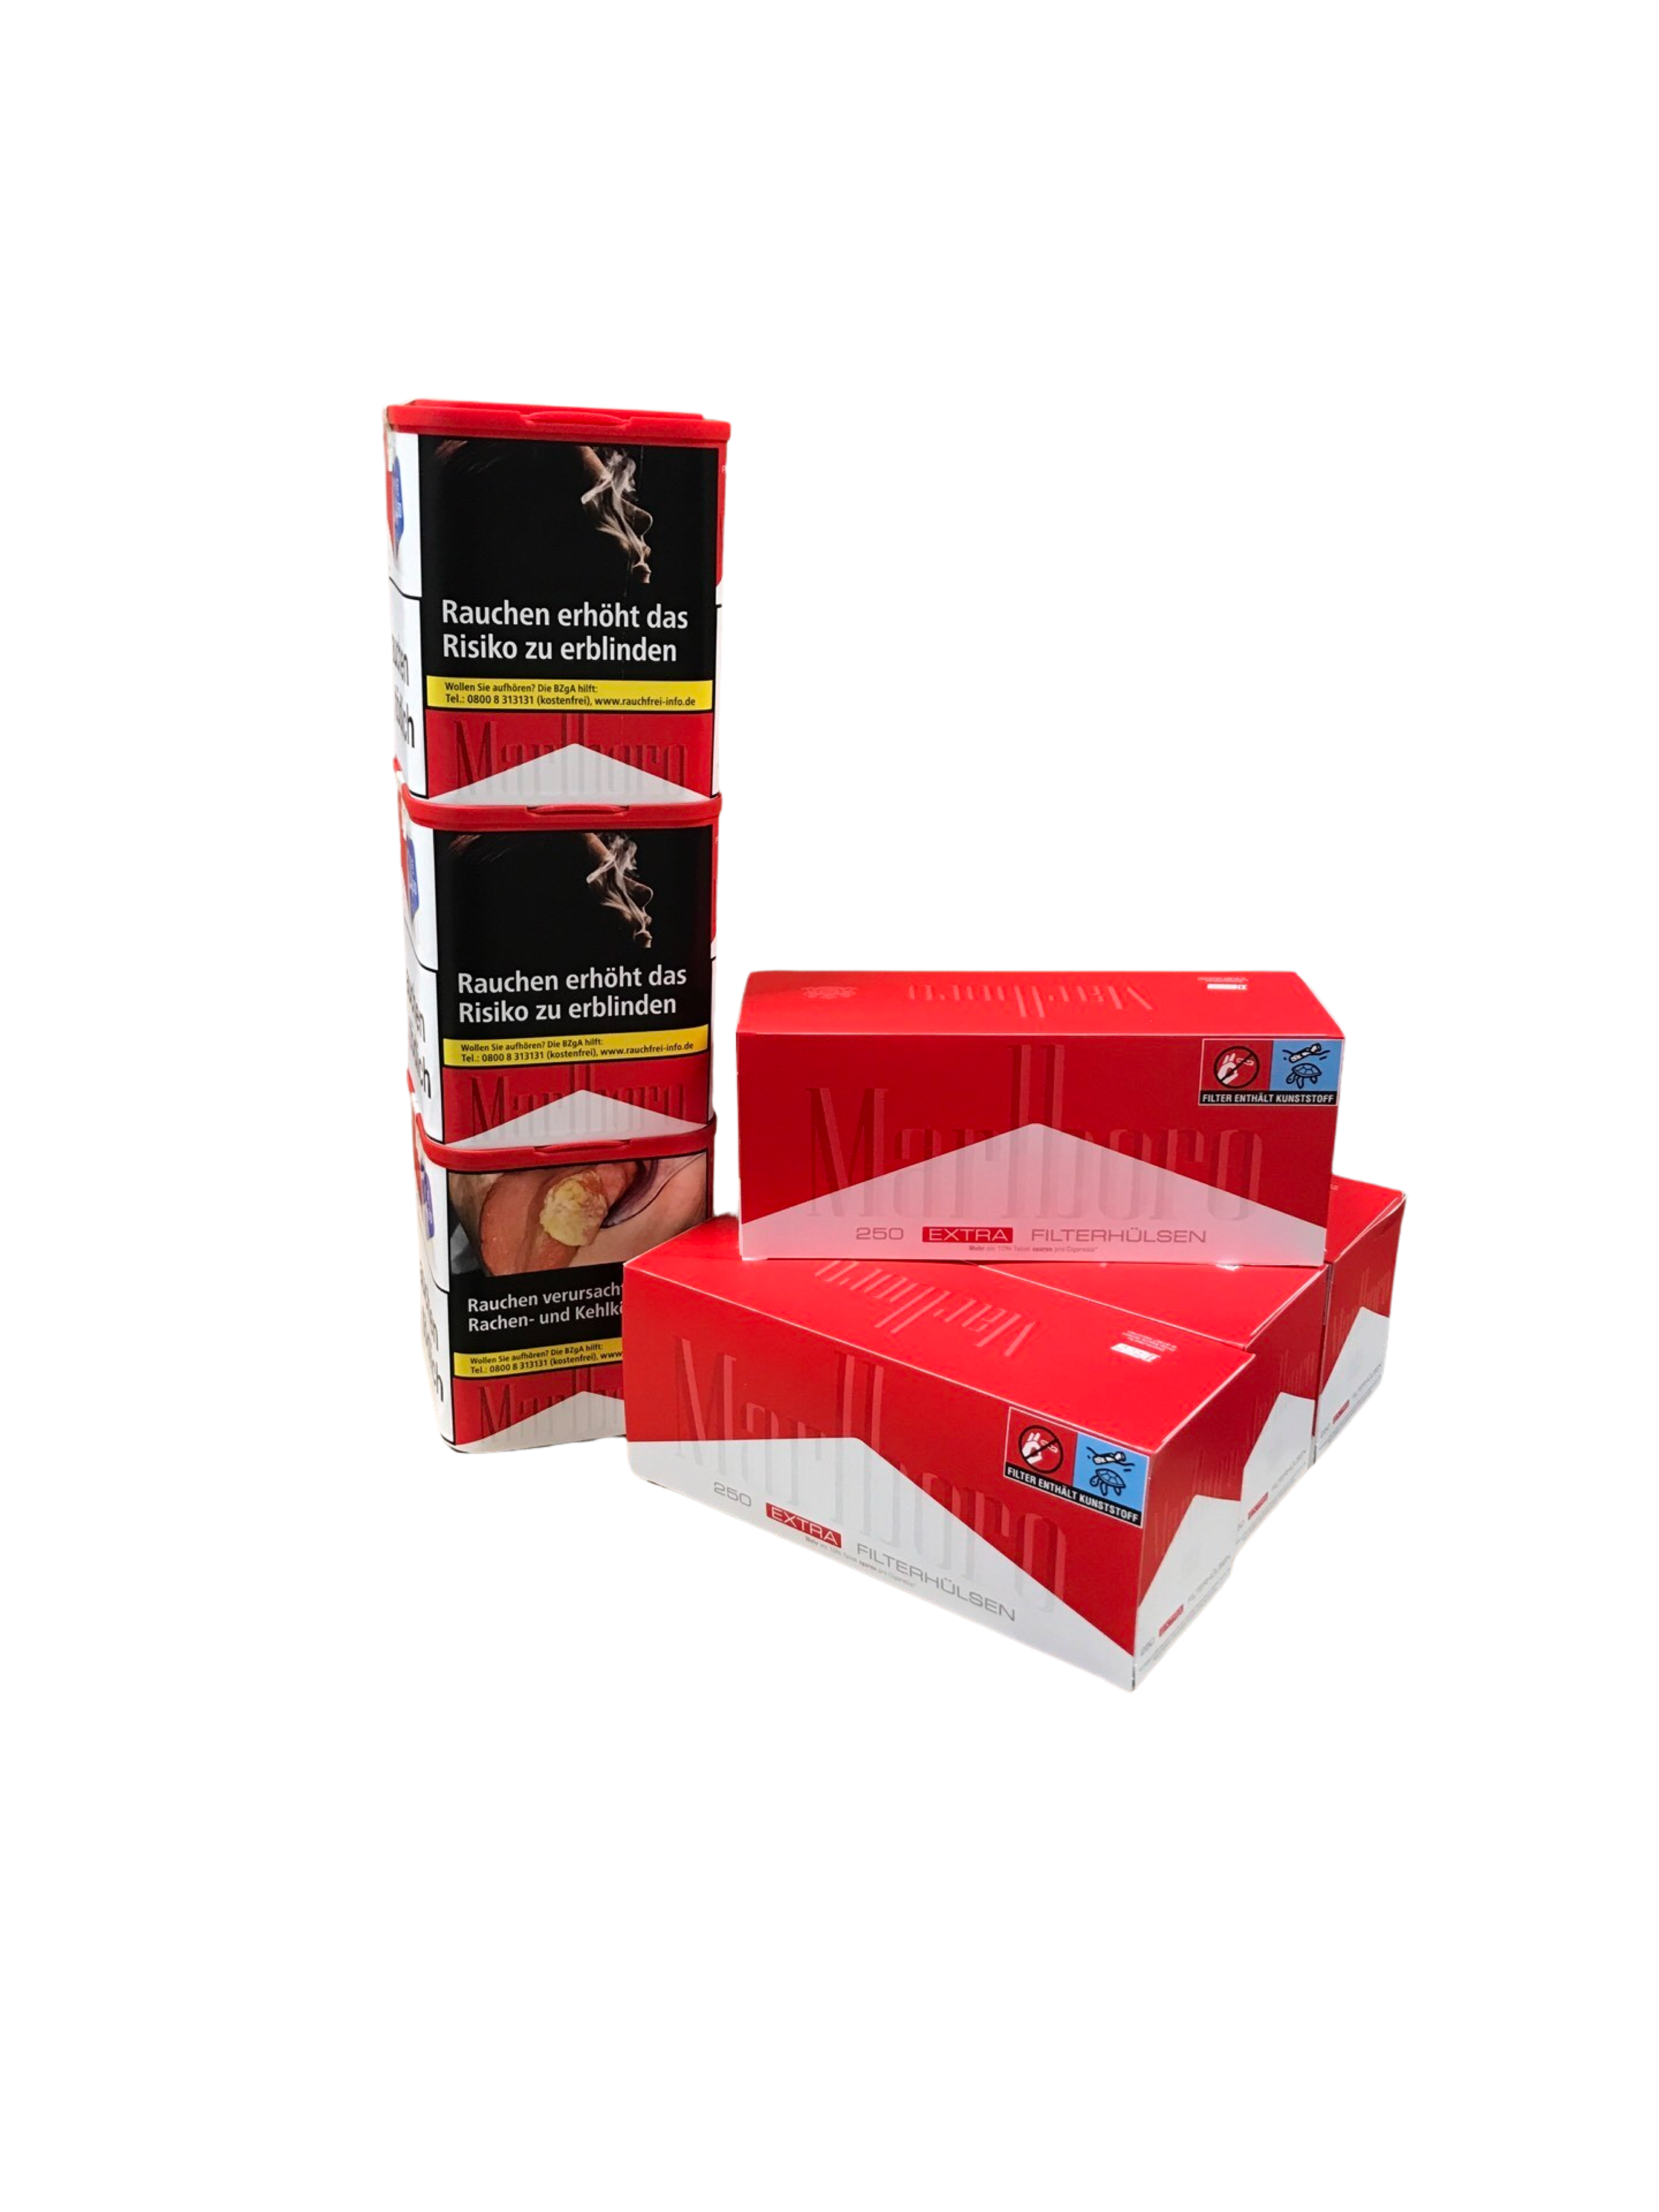 3 x MARLBORO Premium Tobacco Red 110g + 1000 Marlboro Red Extra Hülsen